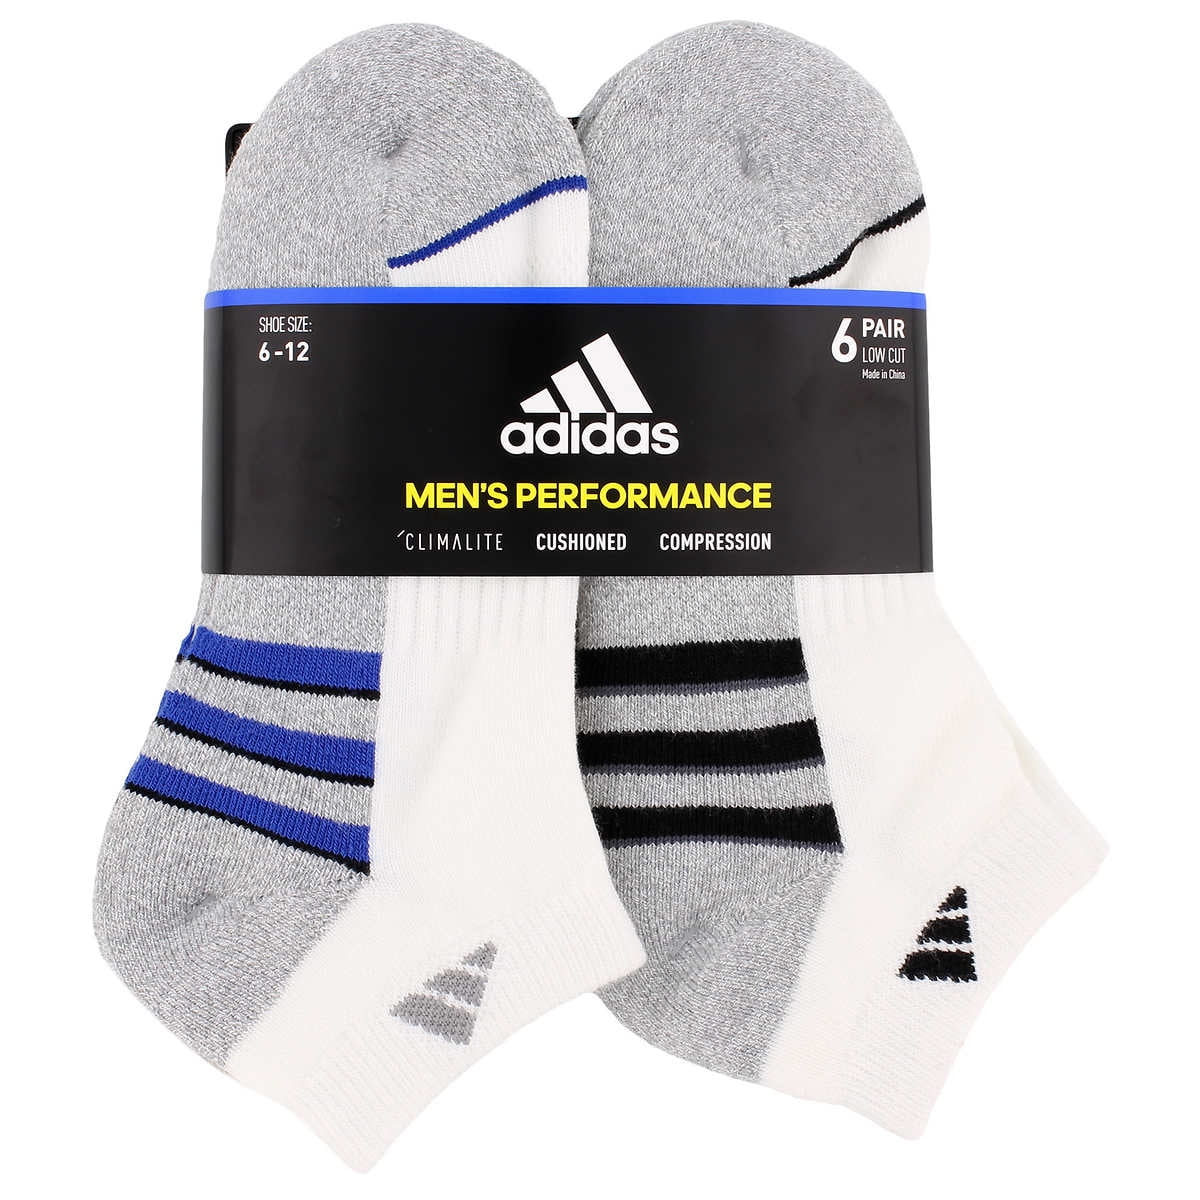 adidas men's low cut socks